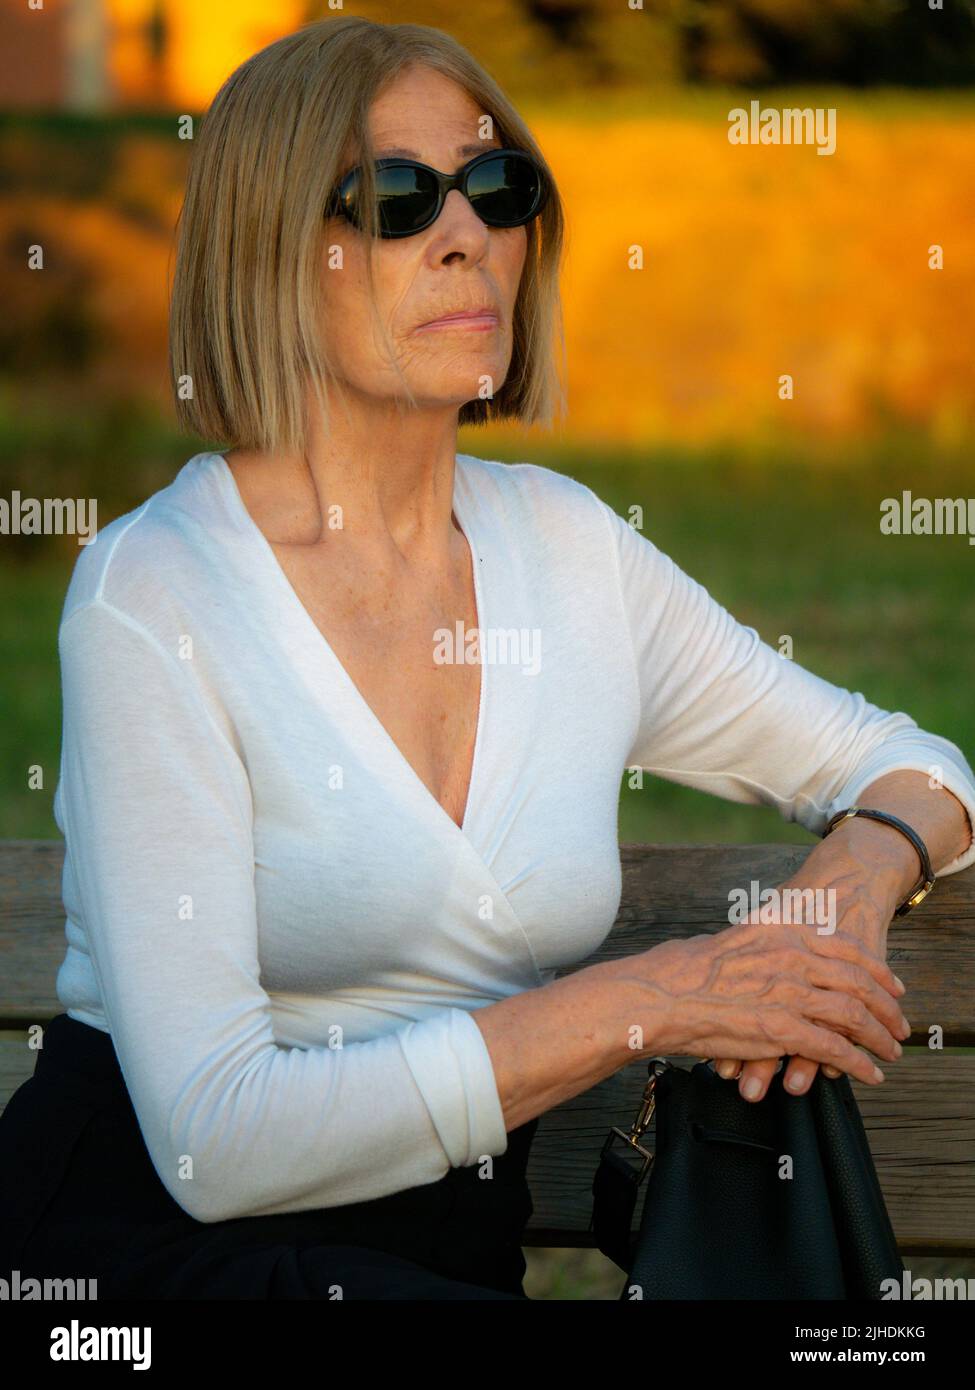 senior fit elegant lady dressed blaka dn white wearing sunglasses enjoying nature in summer Stock Photo